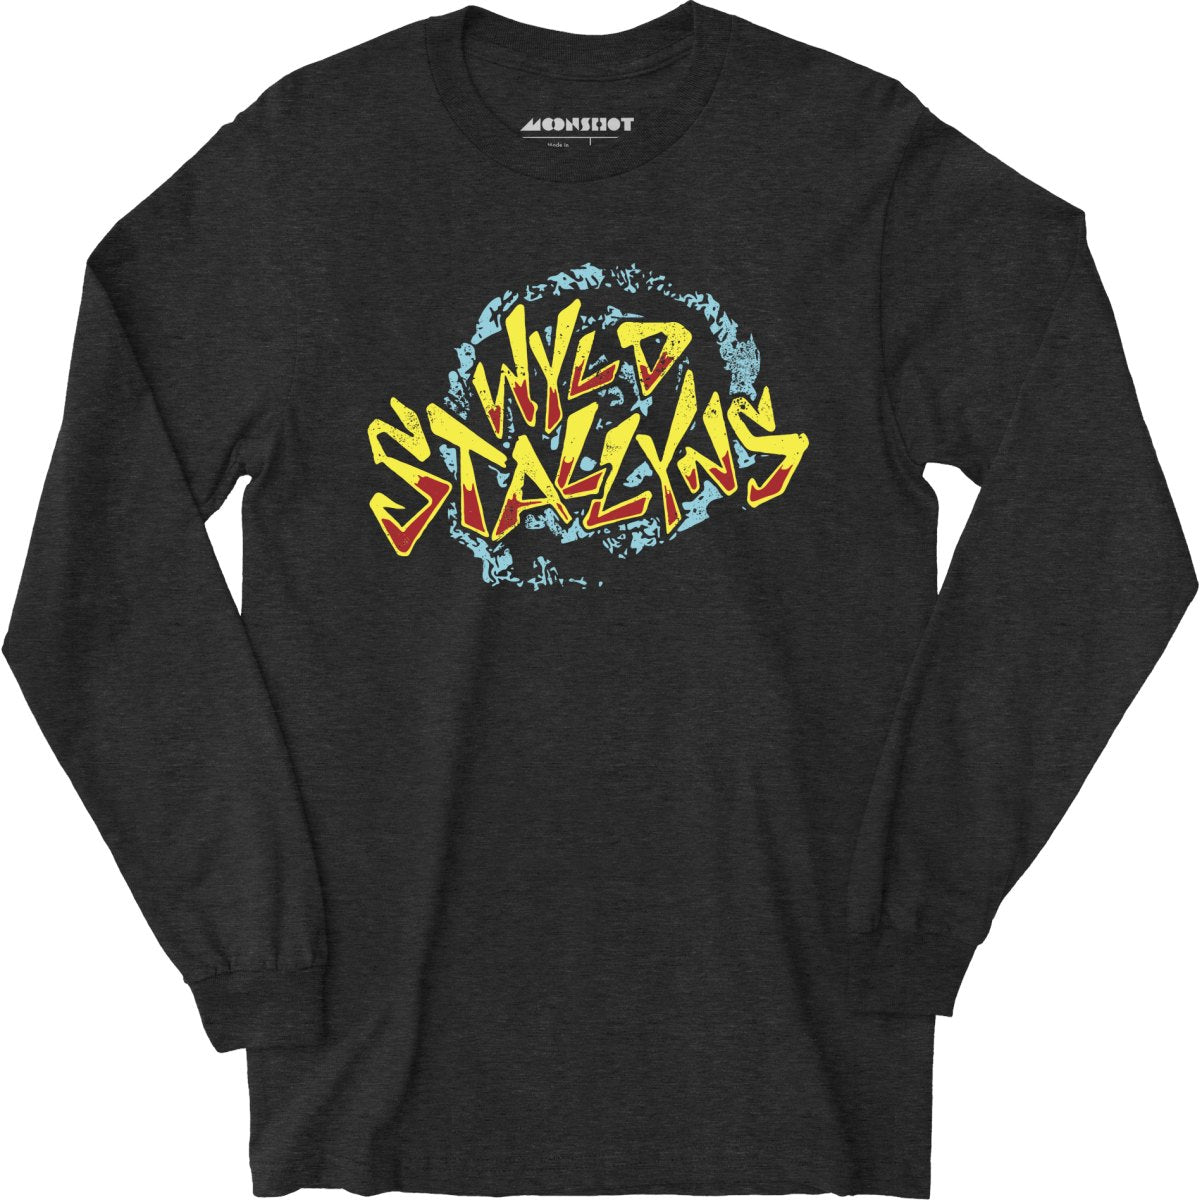 Wyld Stallyns - Long Sleeve T-Shirt